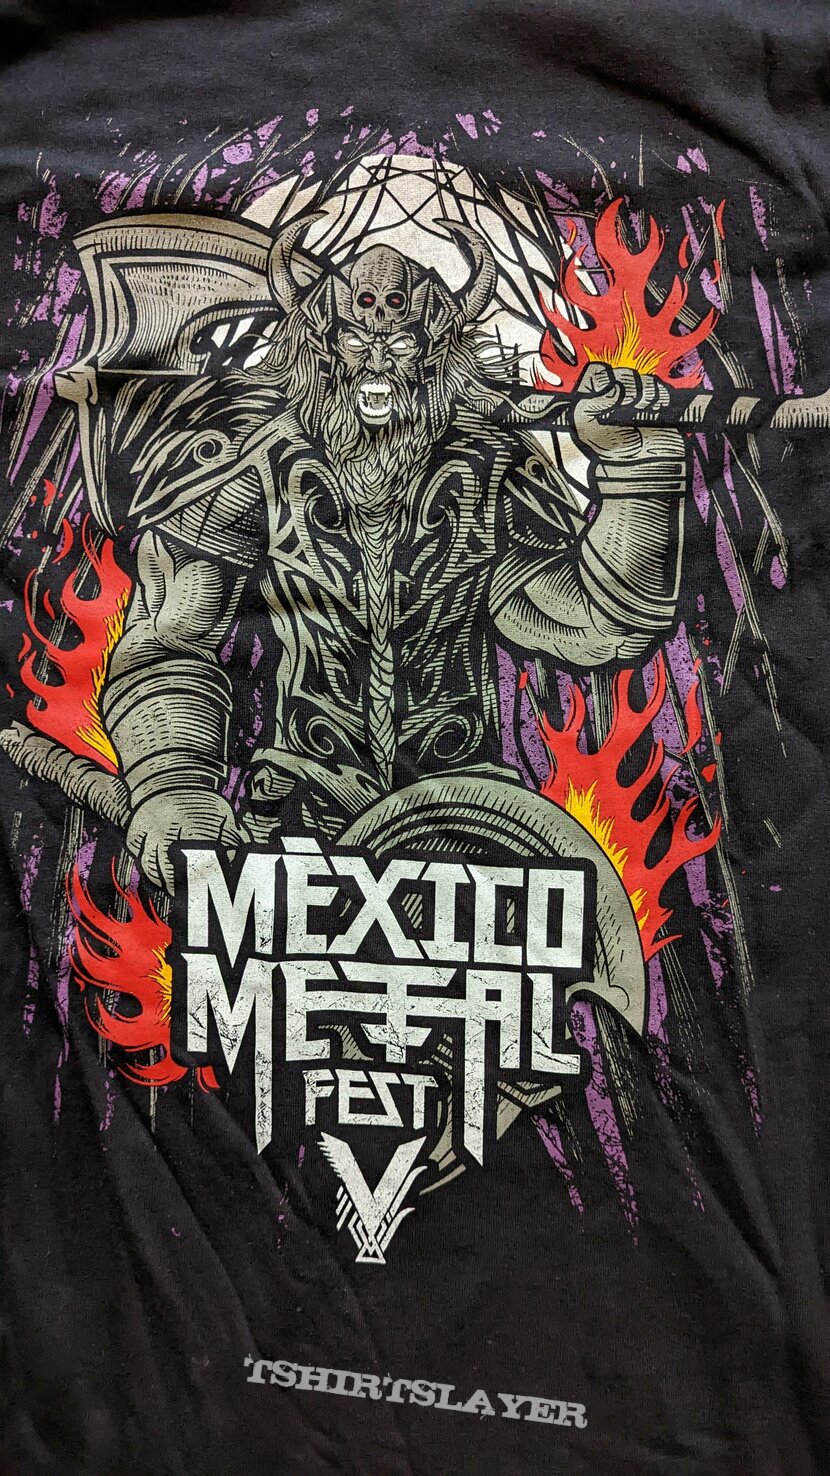 Mexico Metal Fest V - official Day 1 event shirt